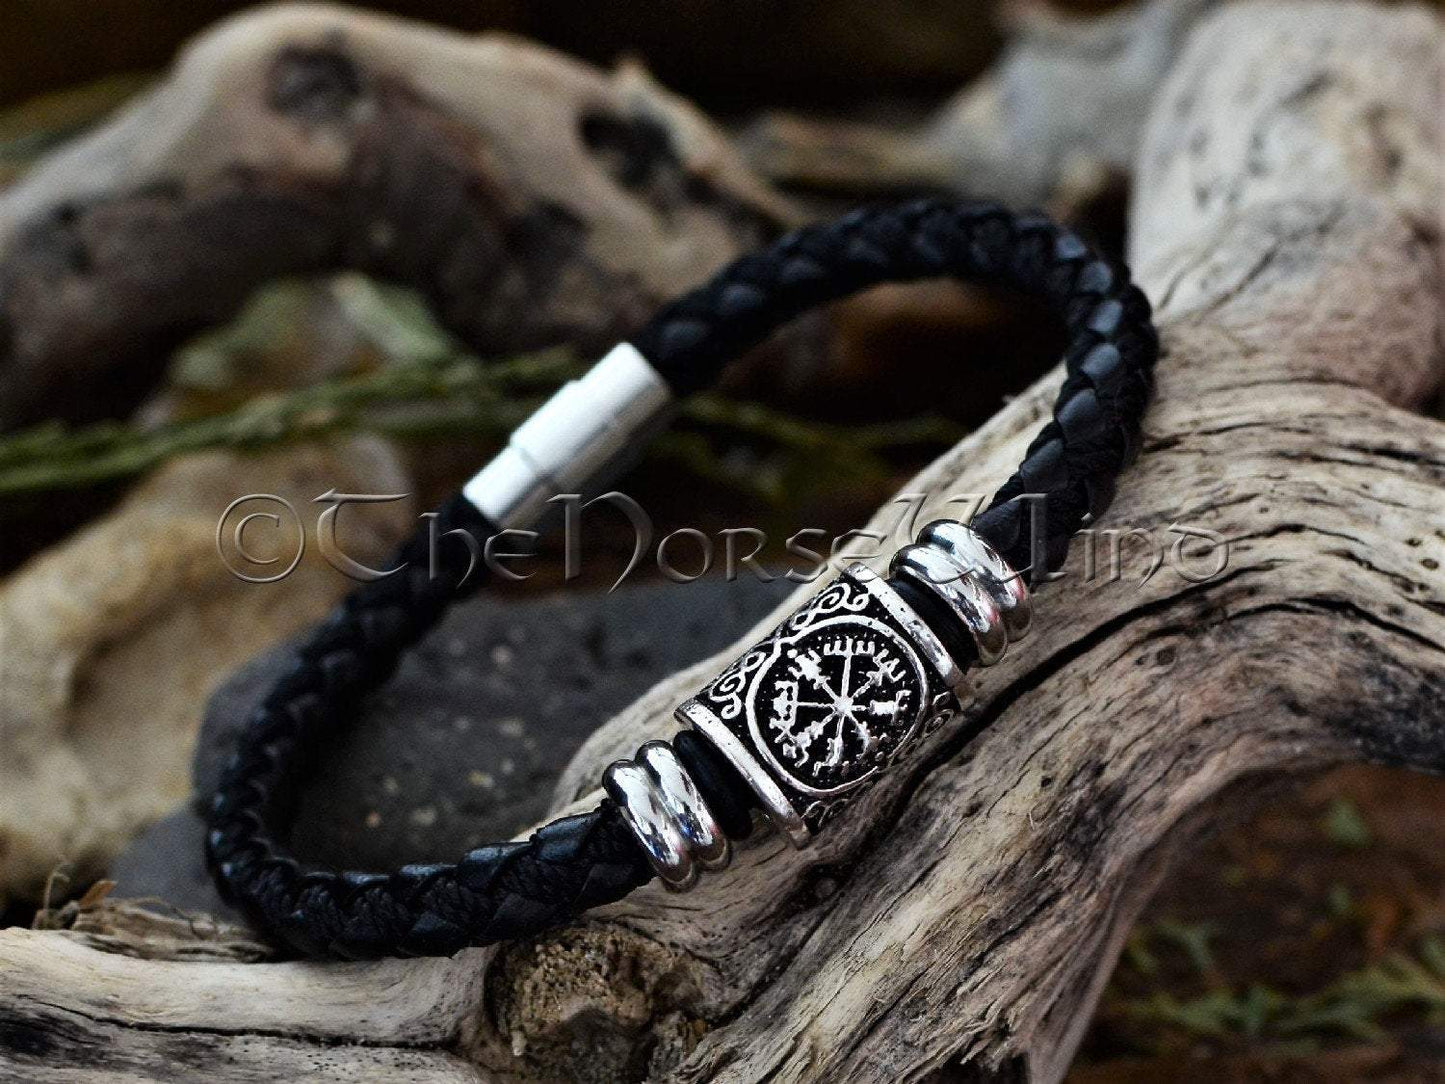 Vegvisir Viking Compass Bracelet, Leather Wristband TheNorseWind